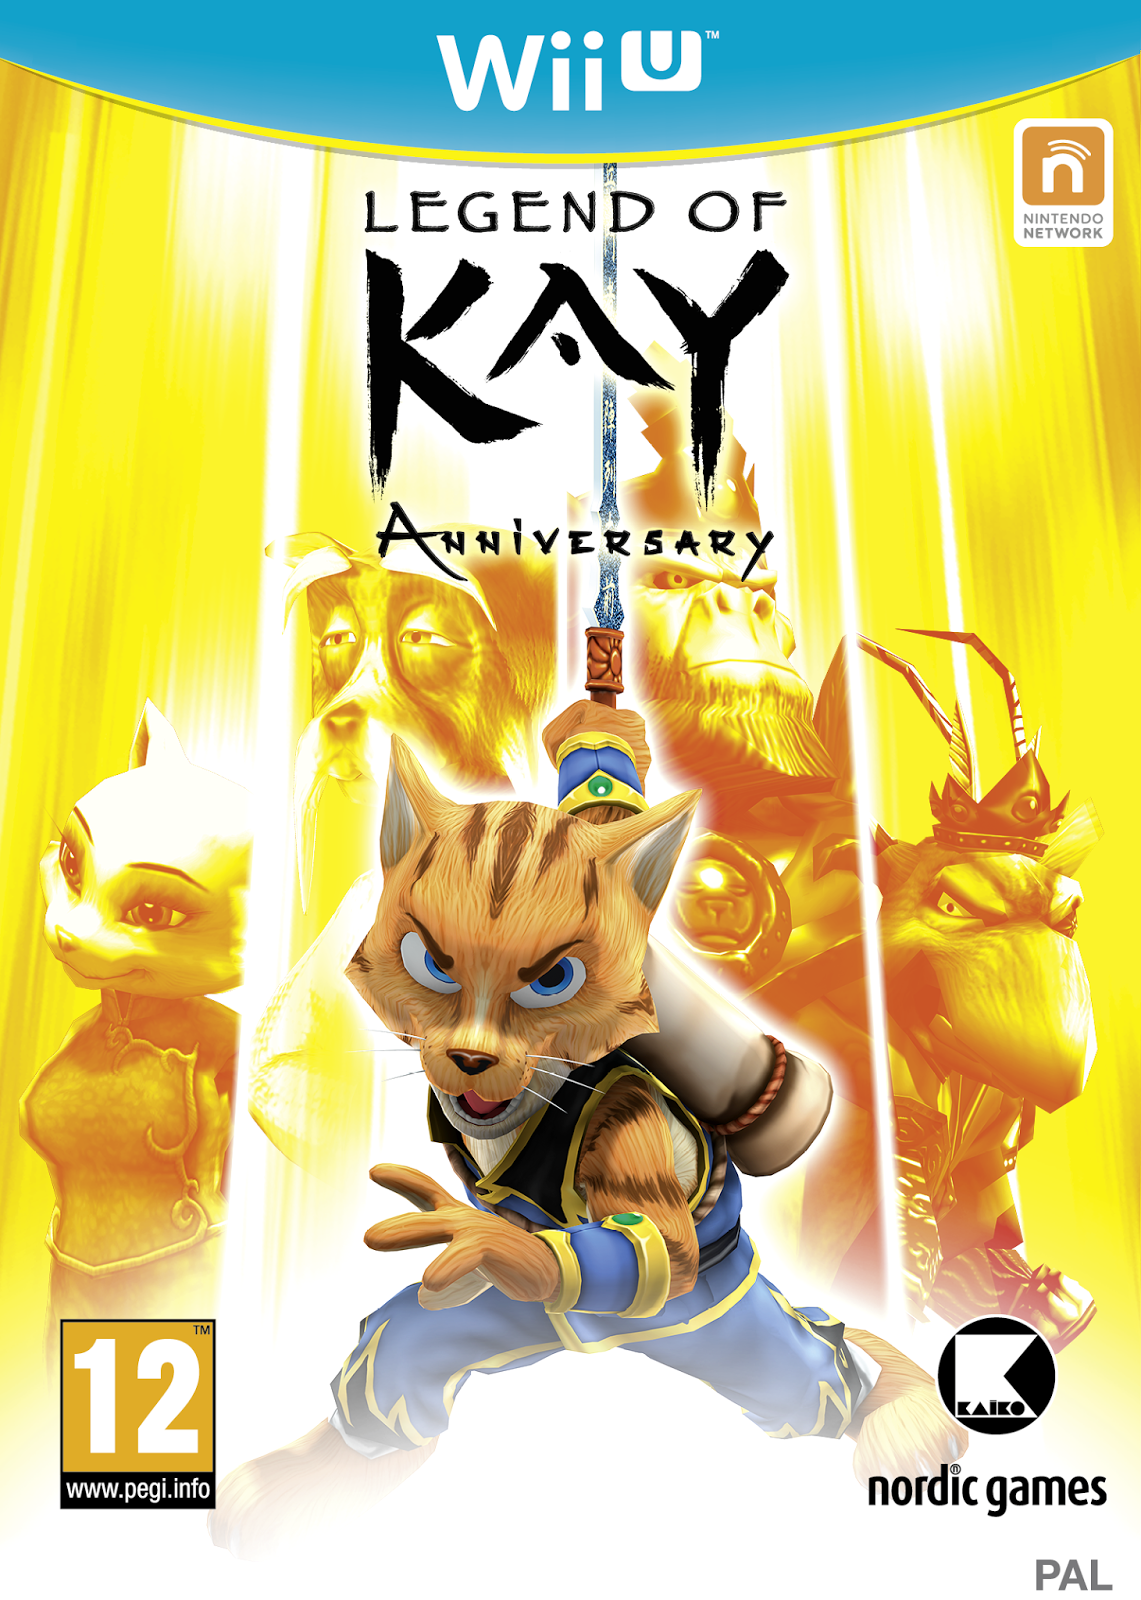 Legend of Kay Anniversary (Wiiu), Nordic Games